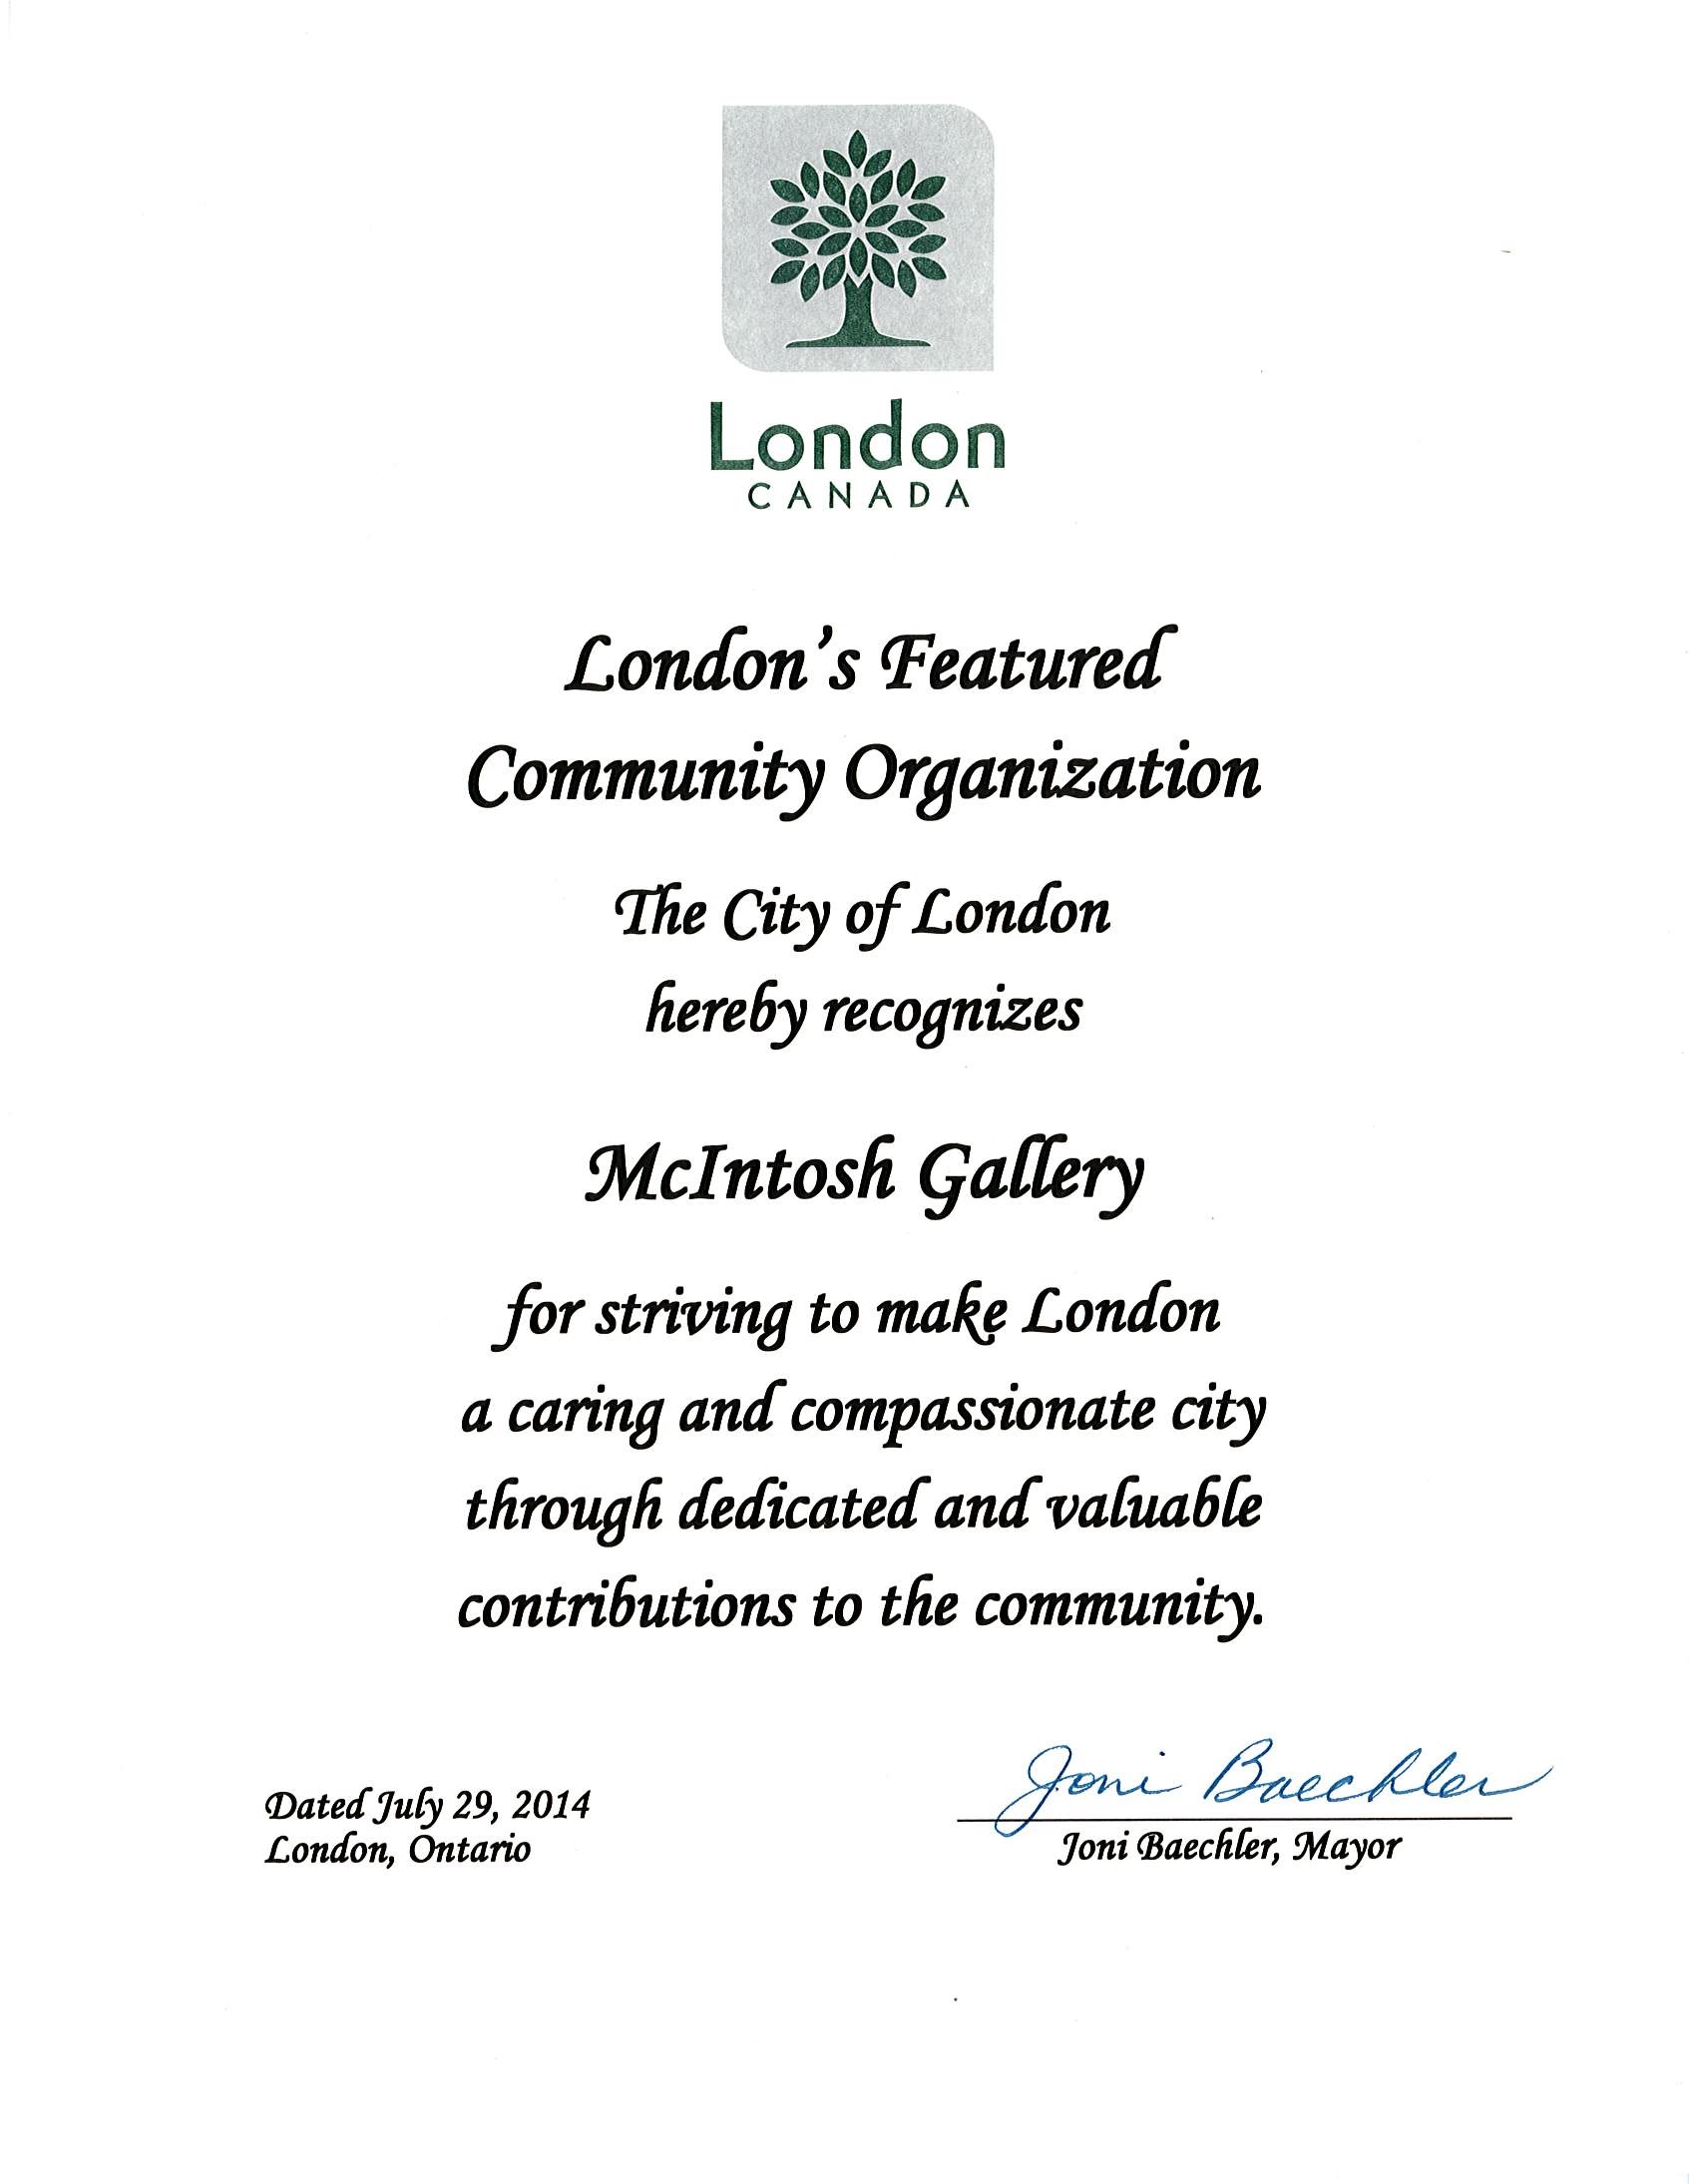 London's Featured Community Organization award